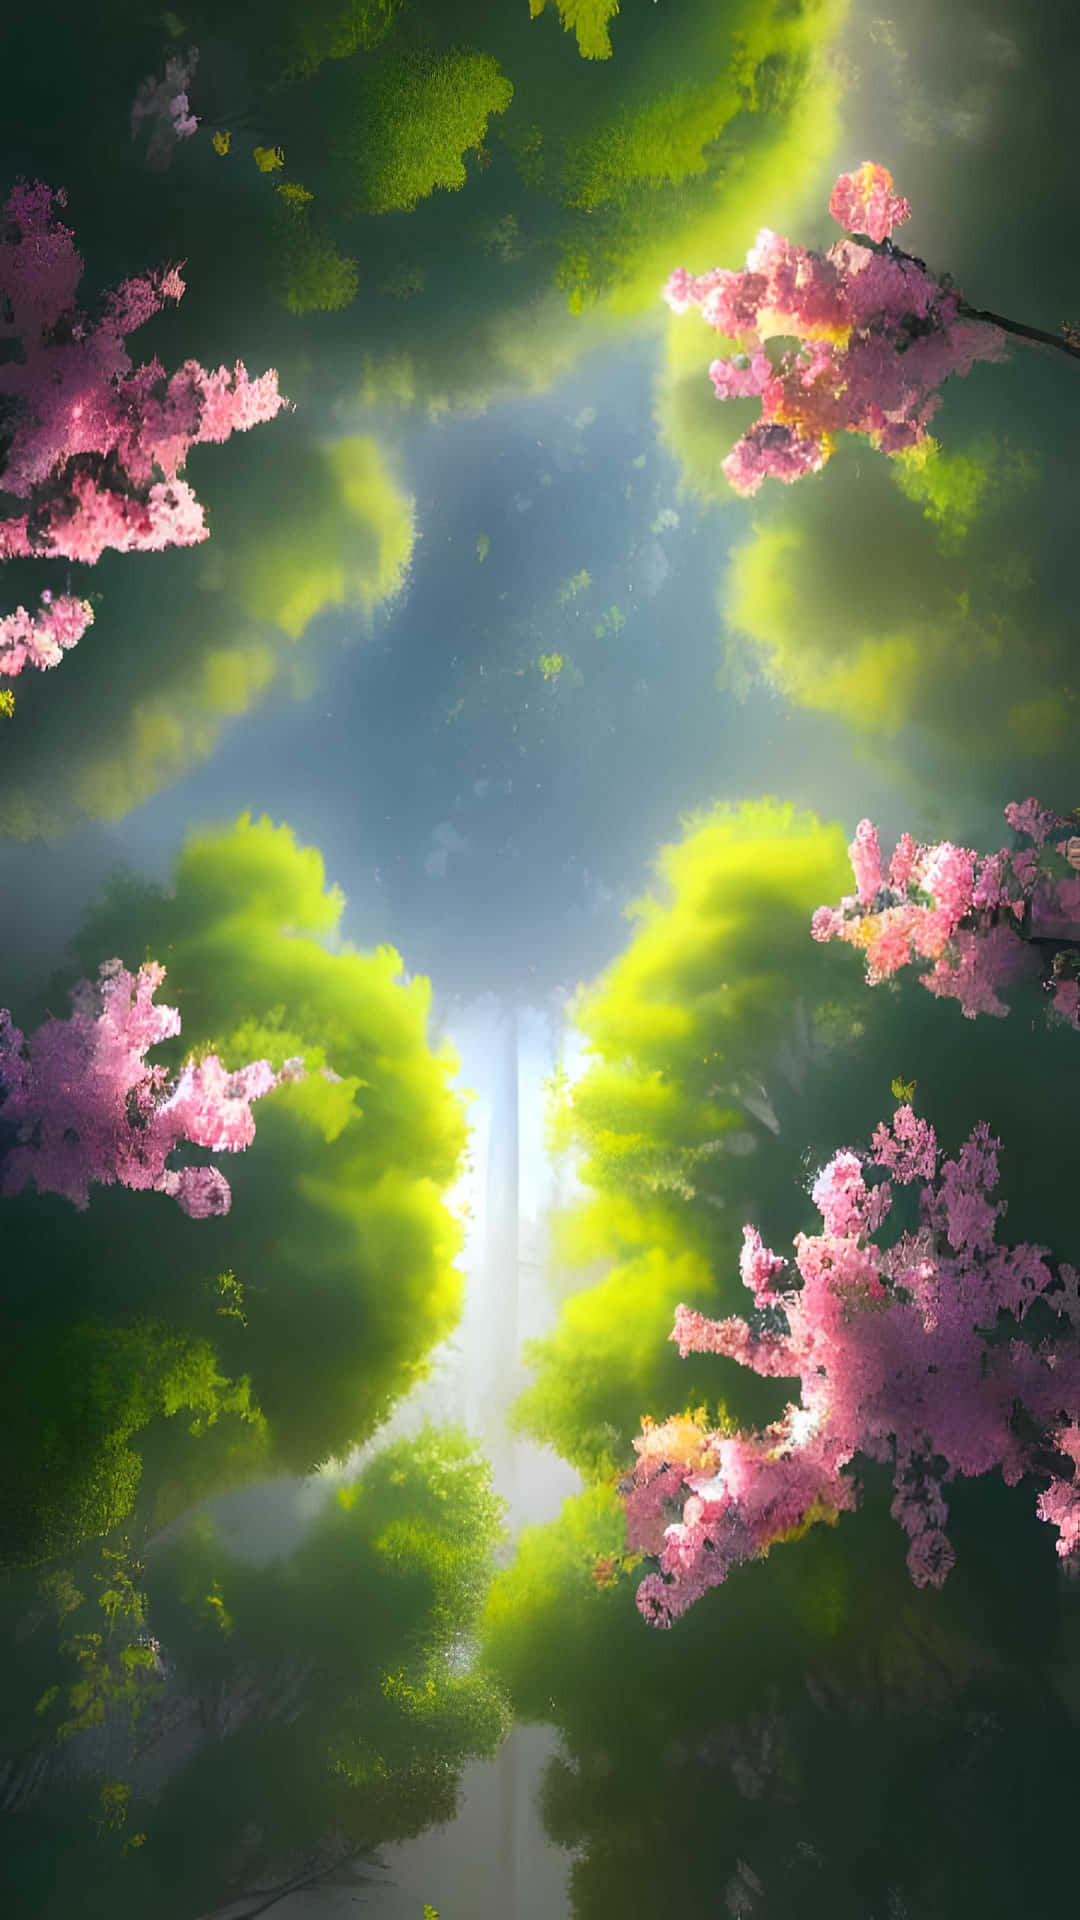 Enchanted Forest Sunlight Through Trees.jpg Wallpaper